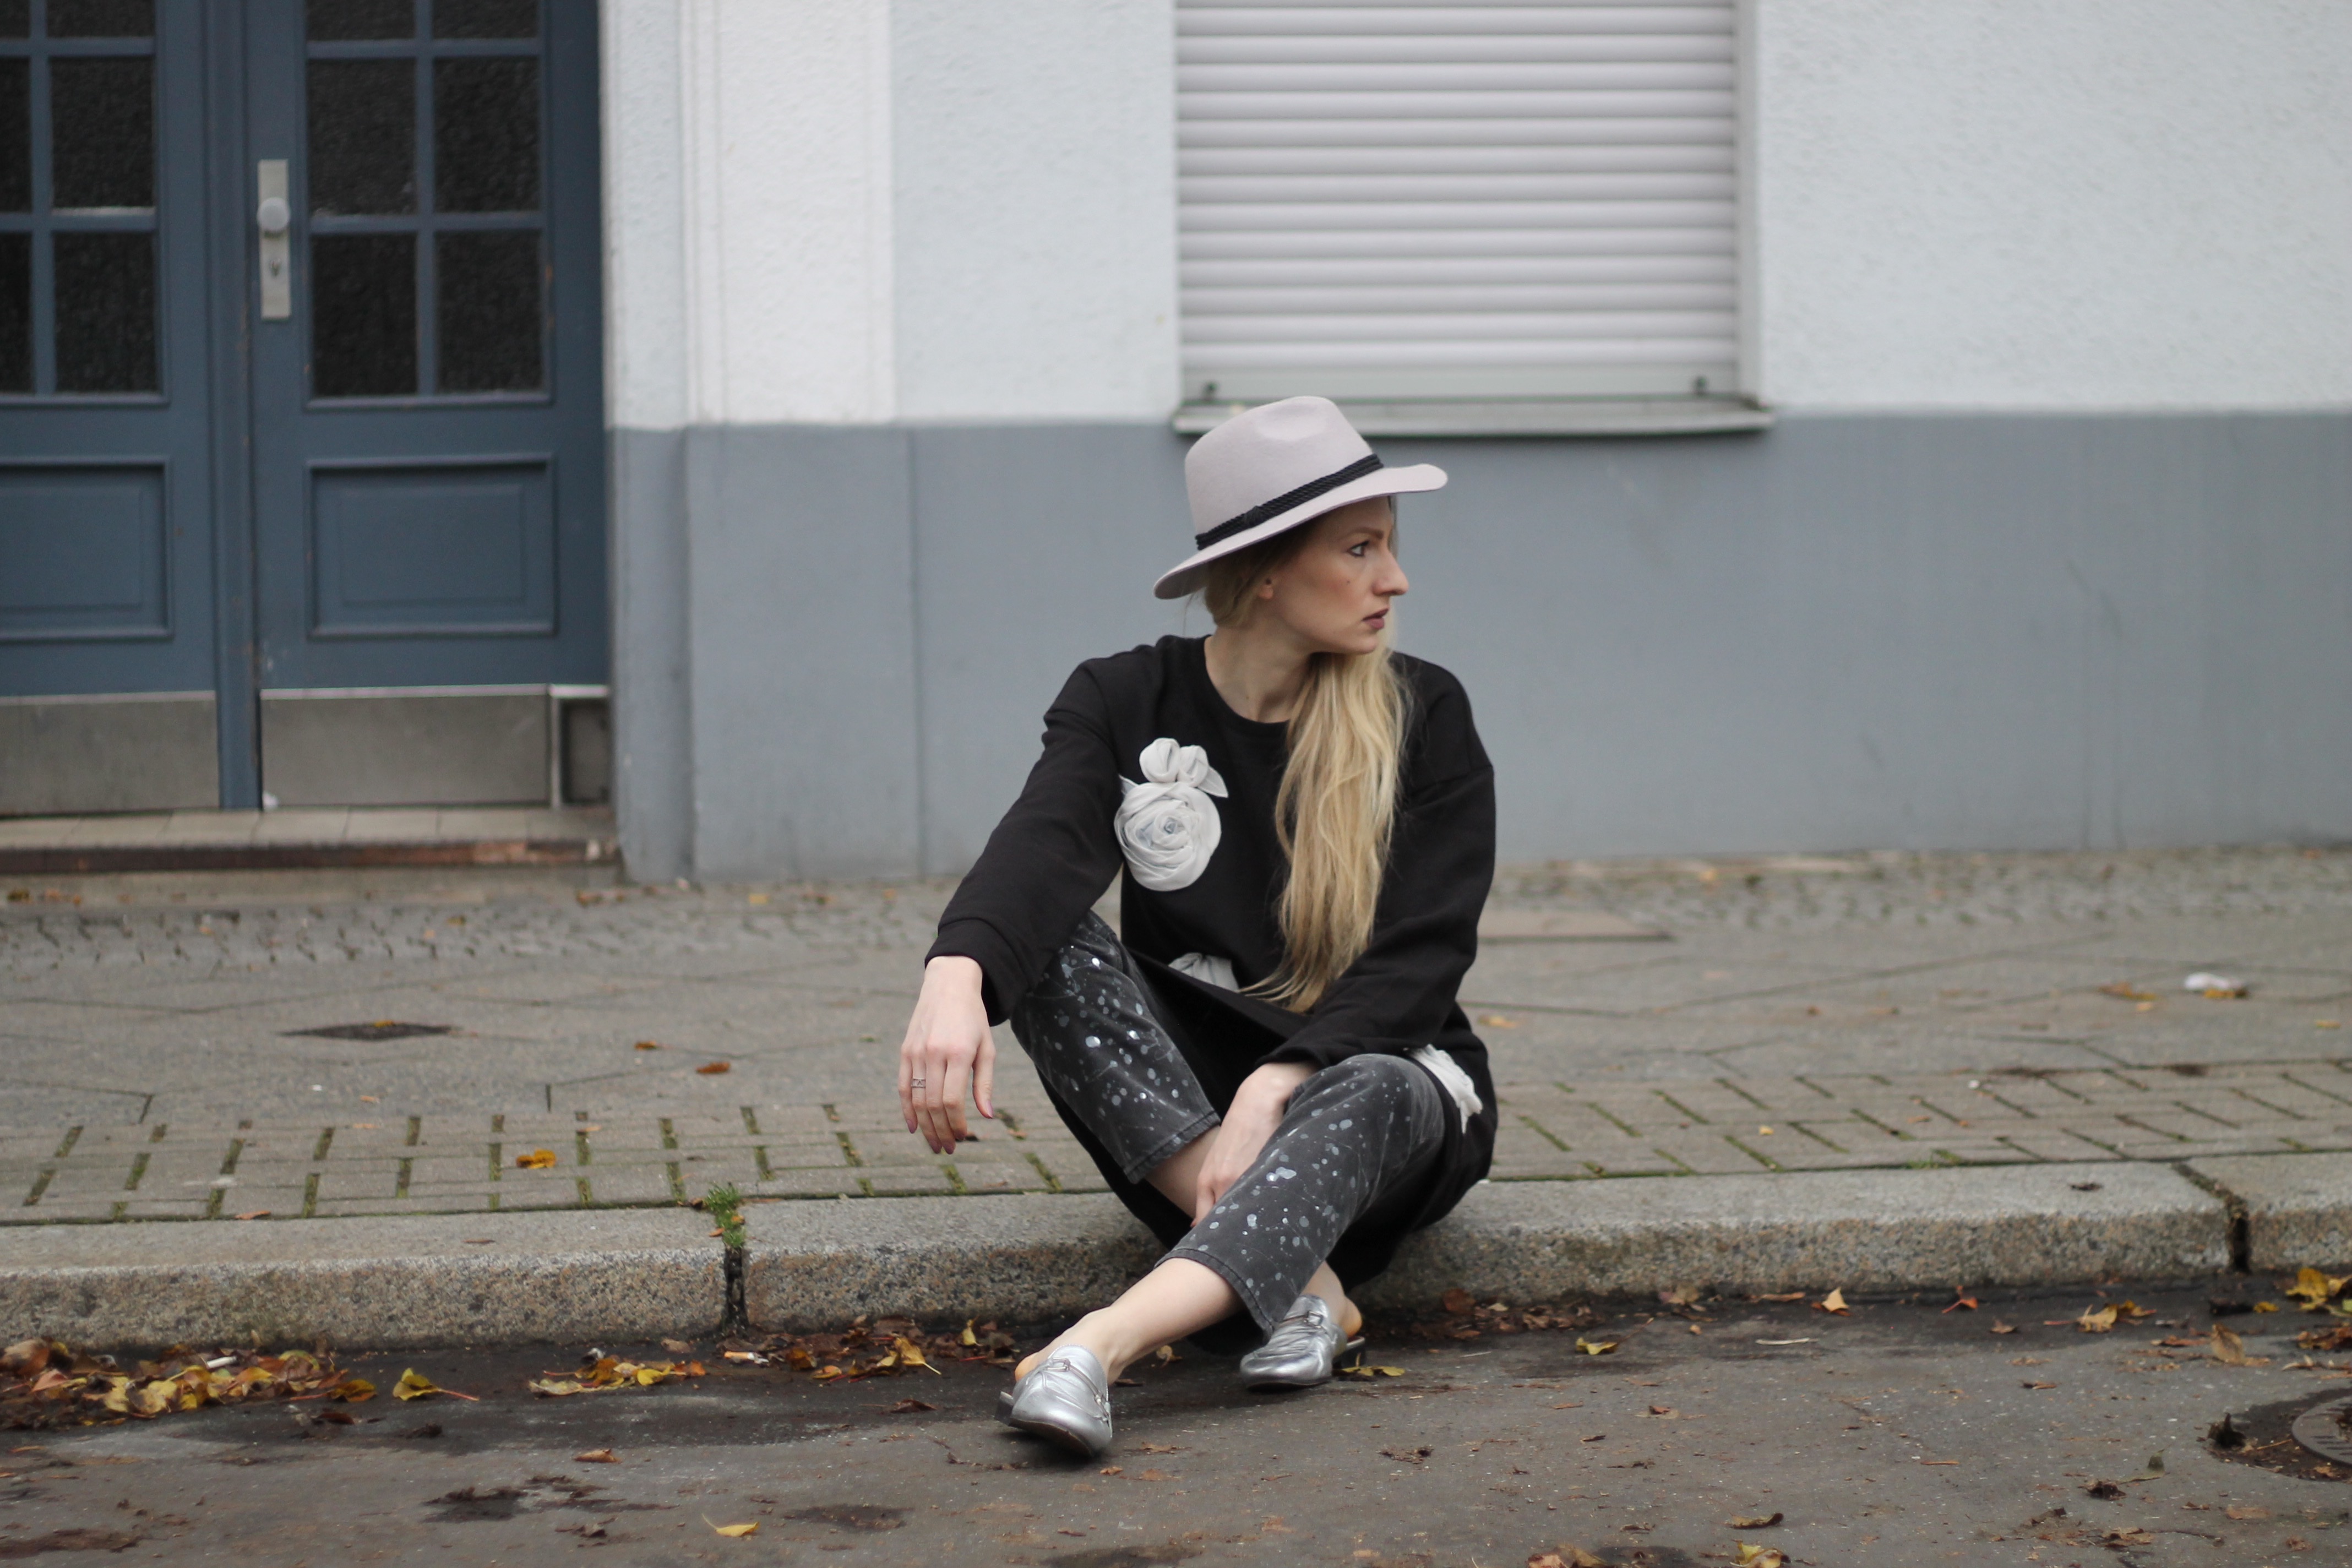 MON MODE | Fashion Blogger | Berlin Street Style | MonMode Blog | Oversized Sweater